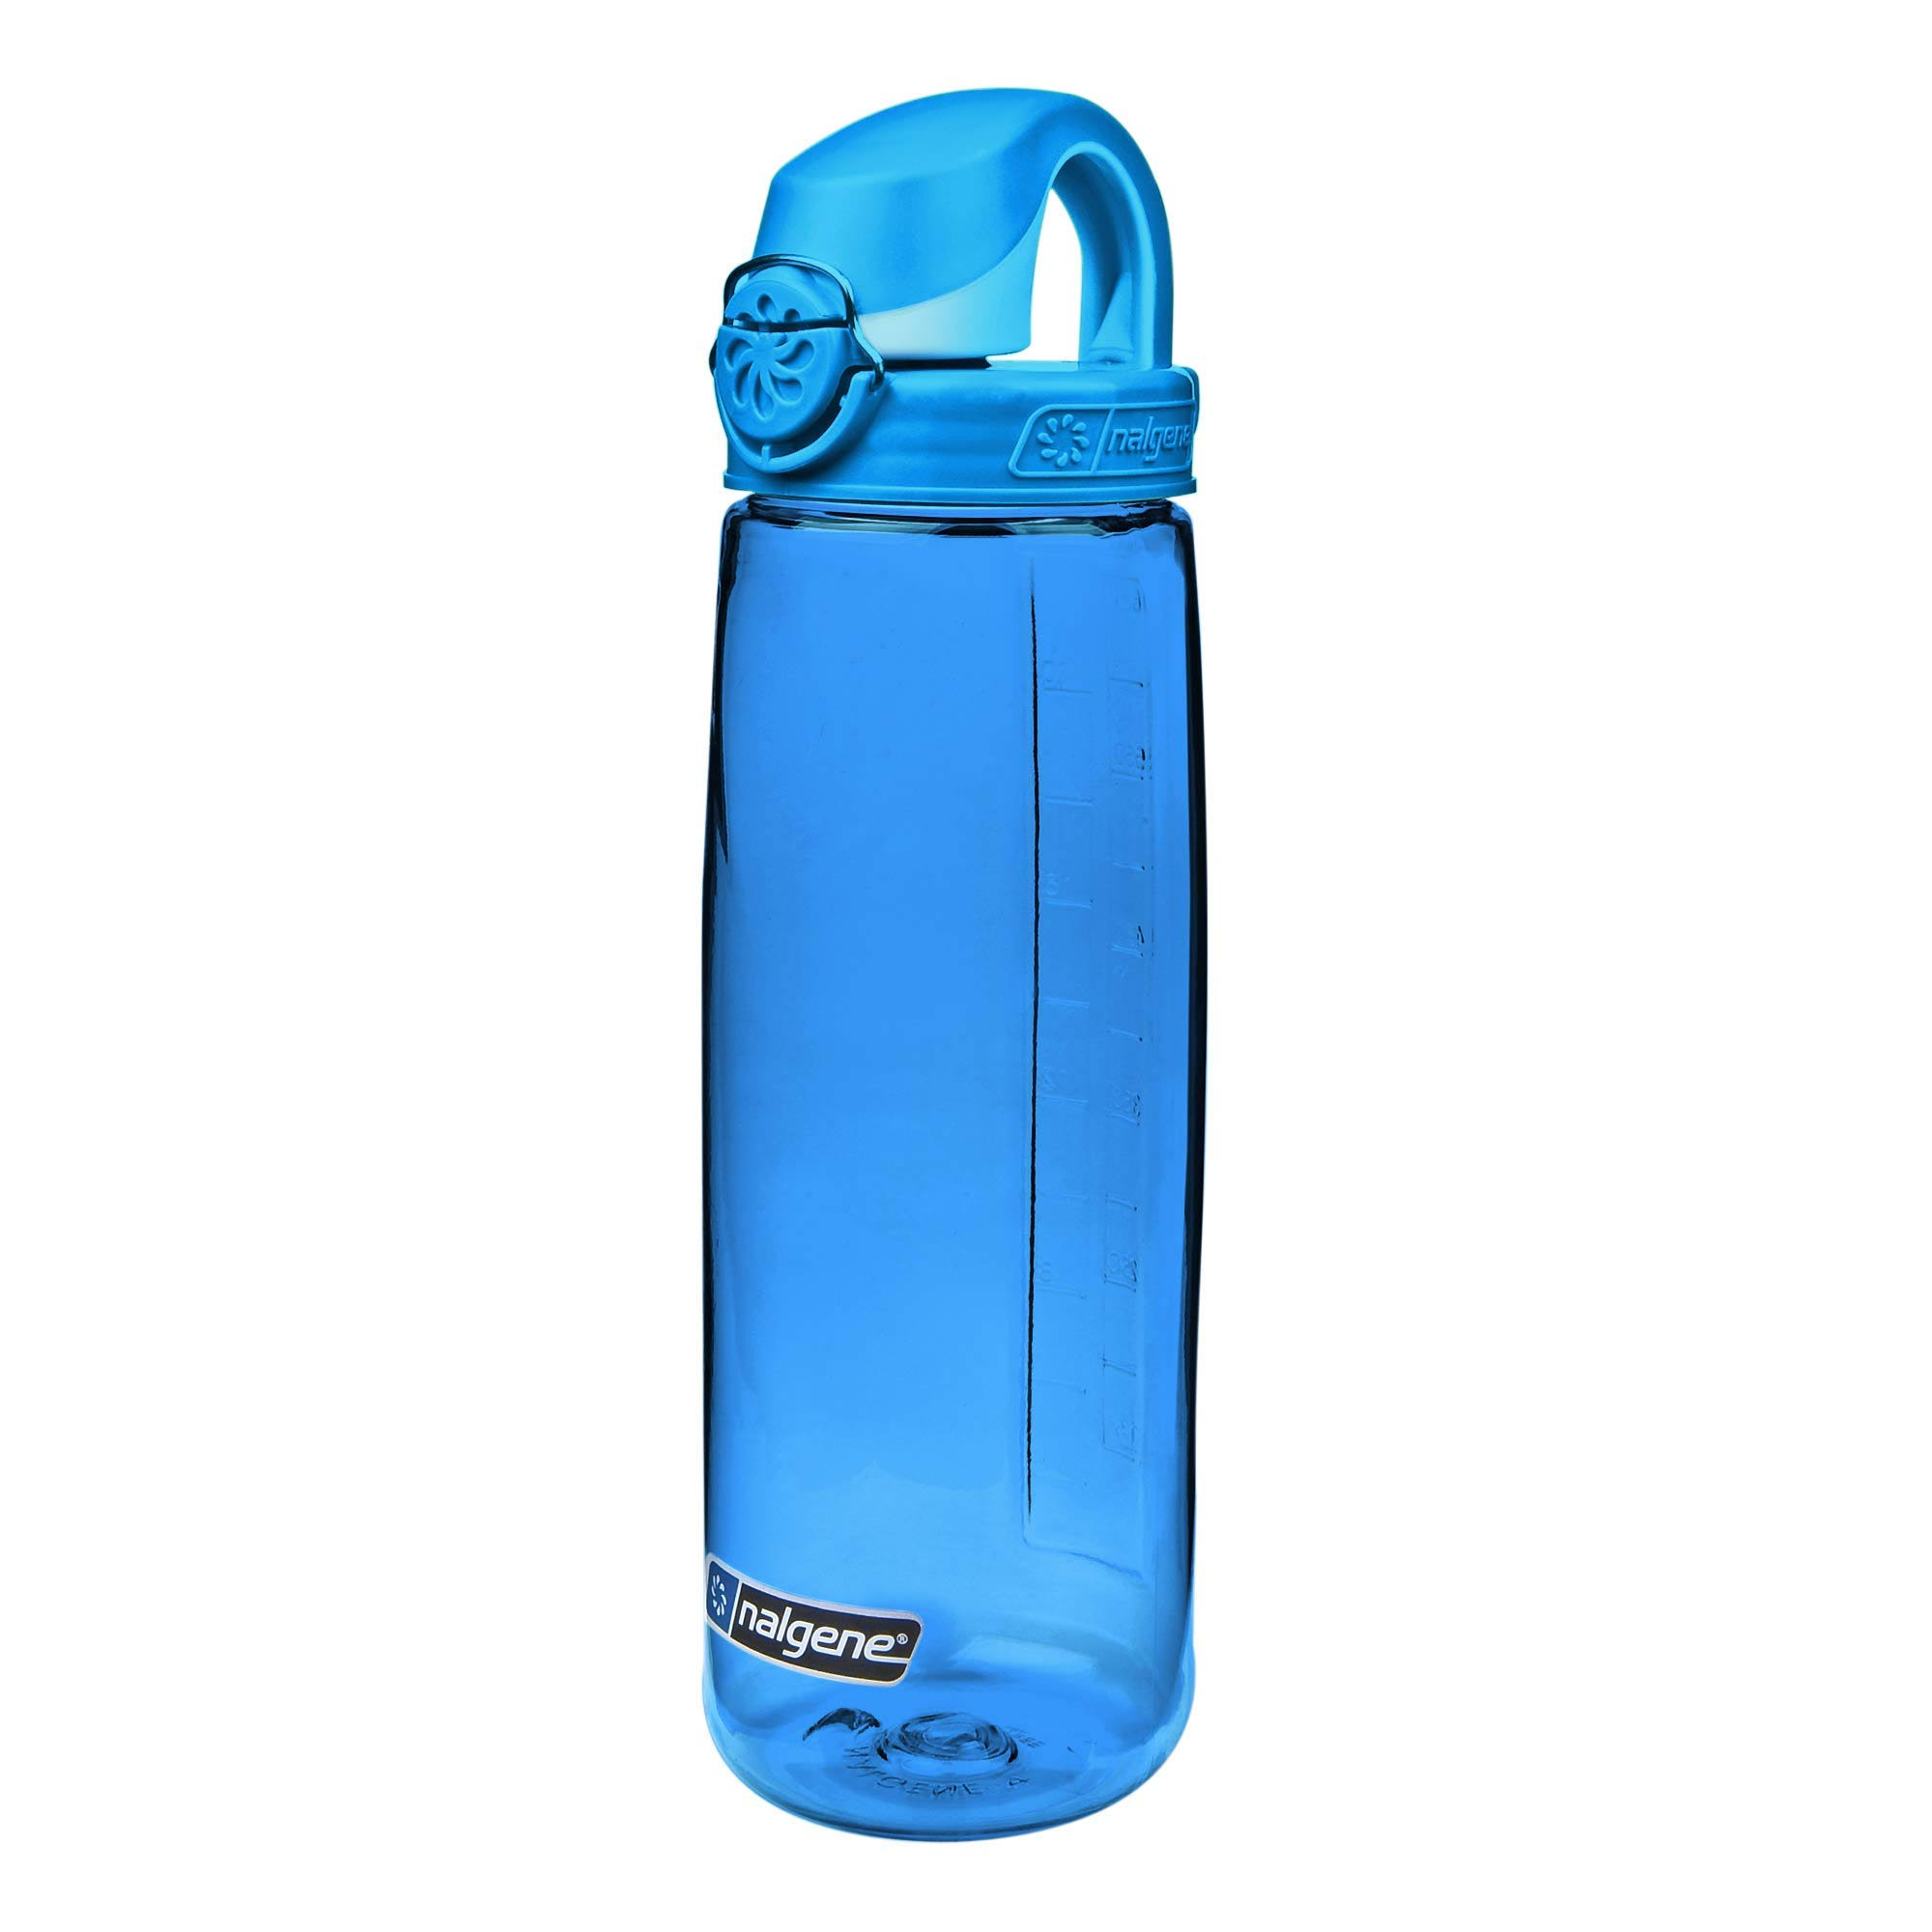 Nalgene Tritan On the Fly Water Bottle - Blue, 24oz